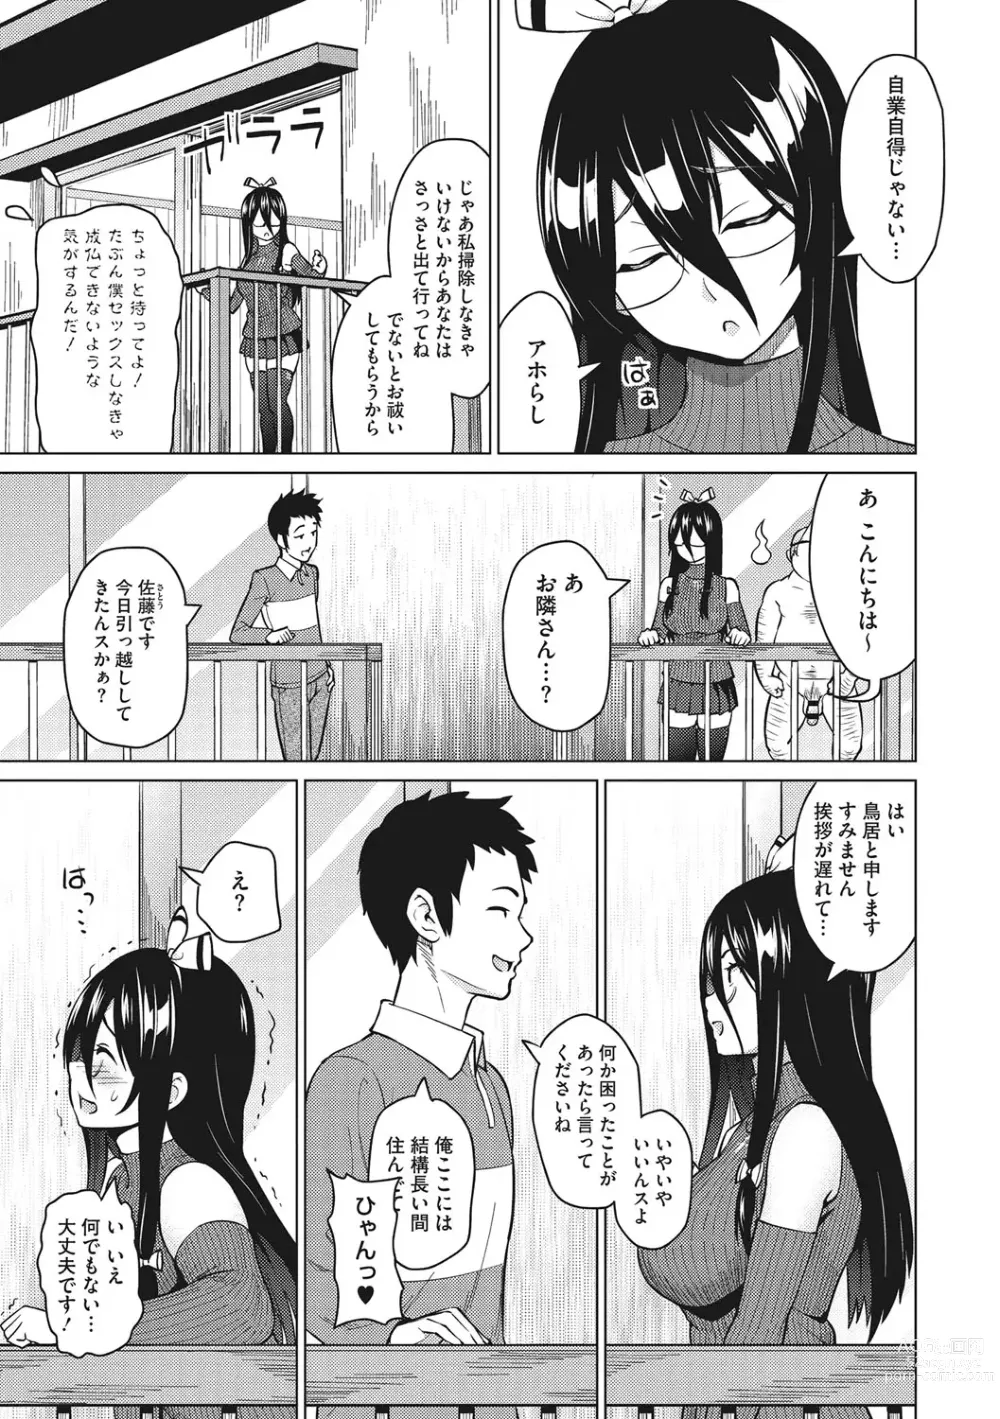 Page 12 of manga Risky Play